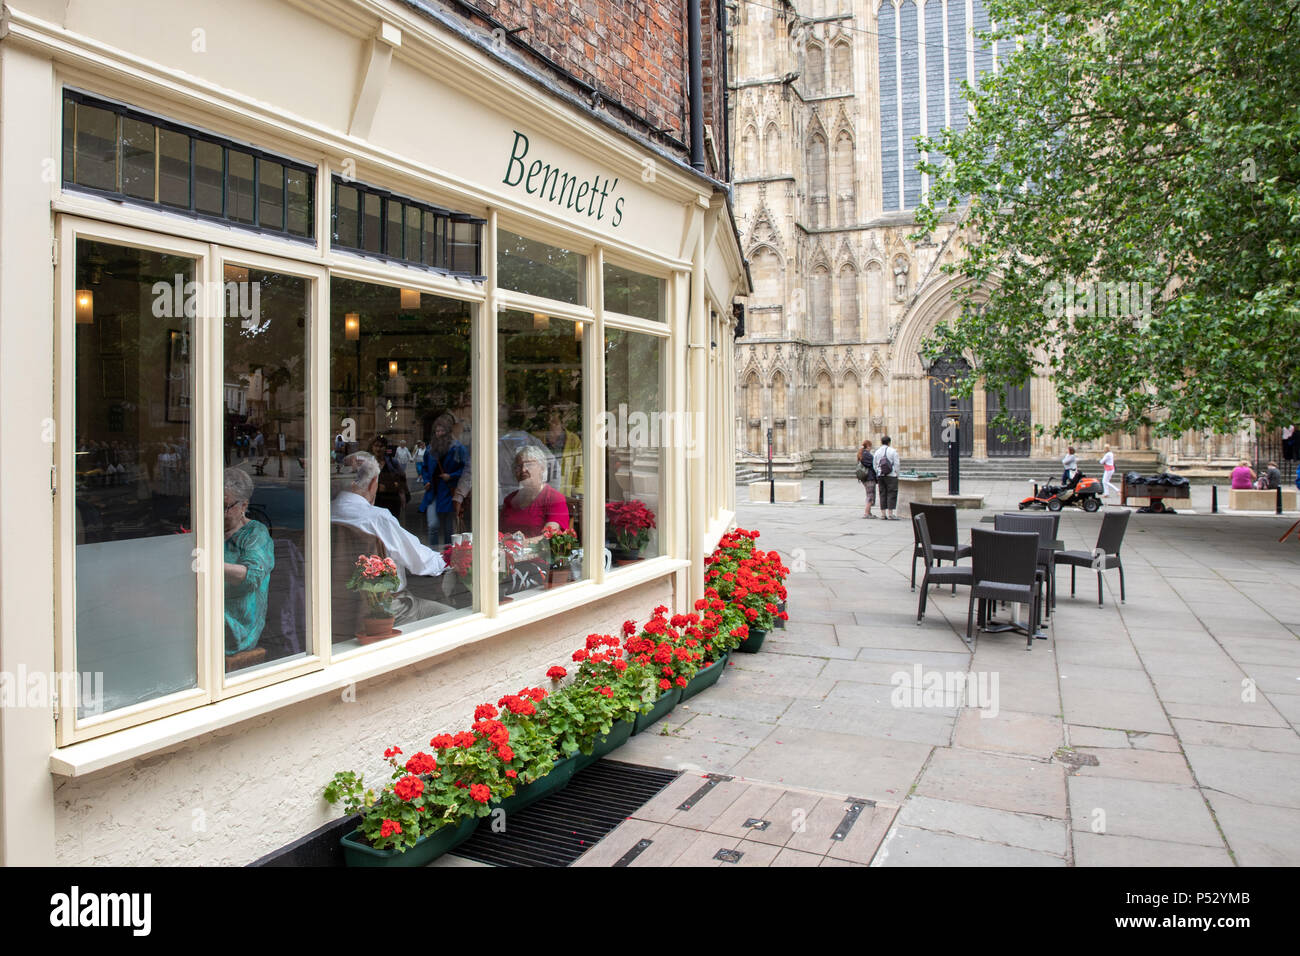 Bennett's Cafe & Bistro, York, England, UK. Stock Photo